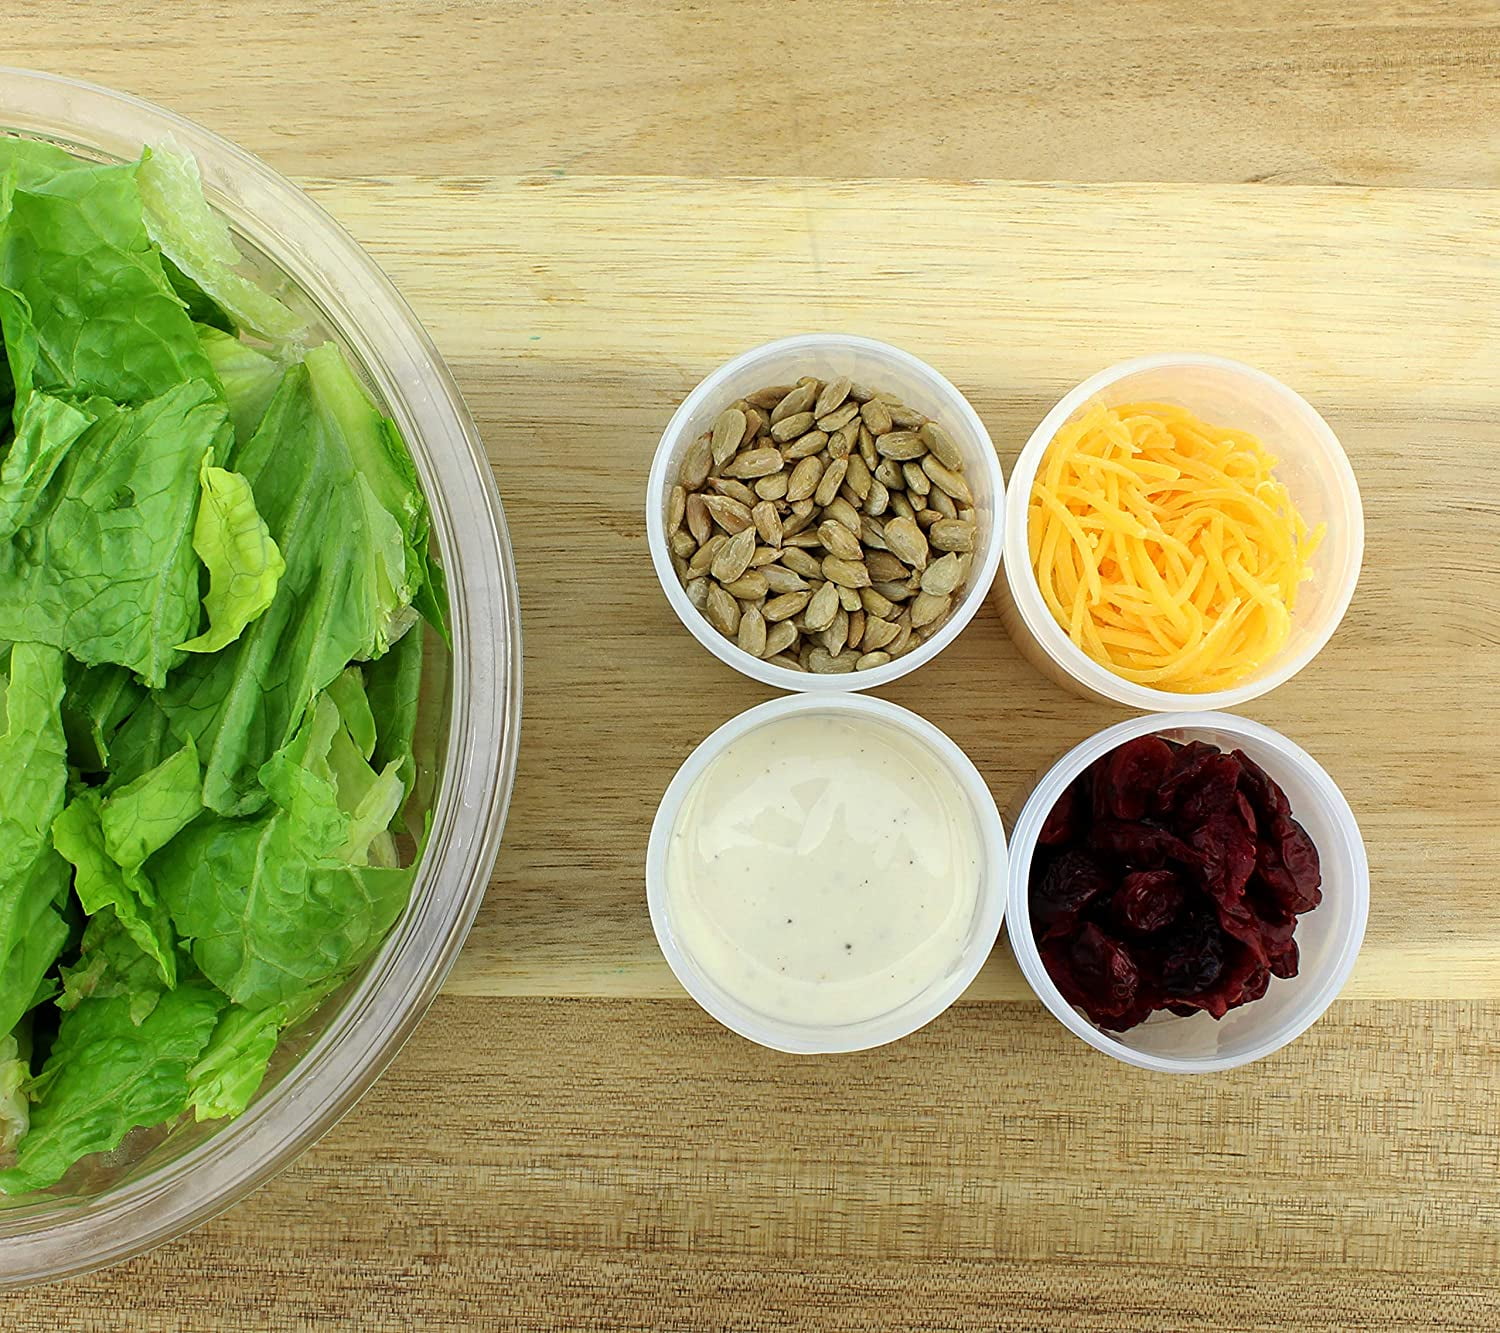 Salad Dressing Container To Go: LOPNUR 6 Pack 1.7 oz Reusable Condimen